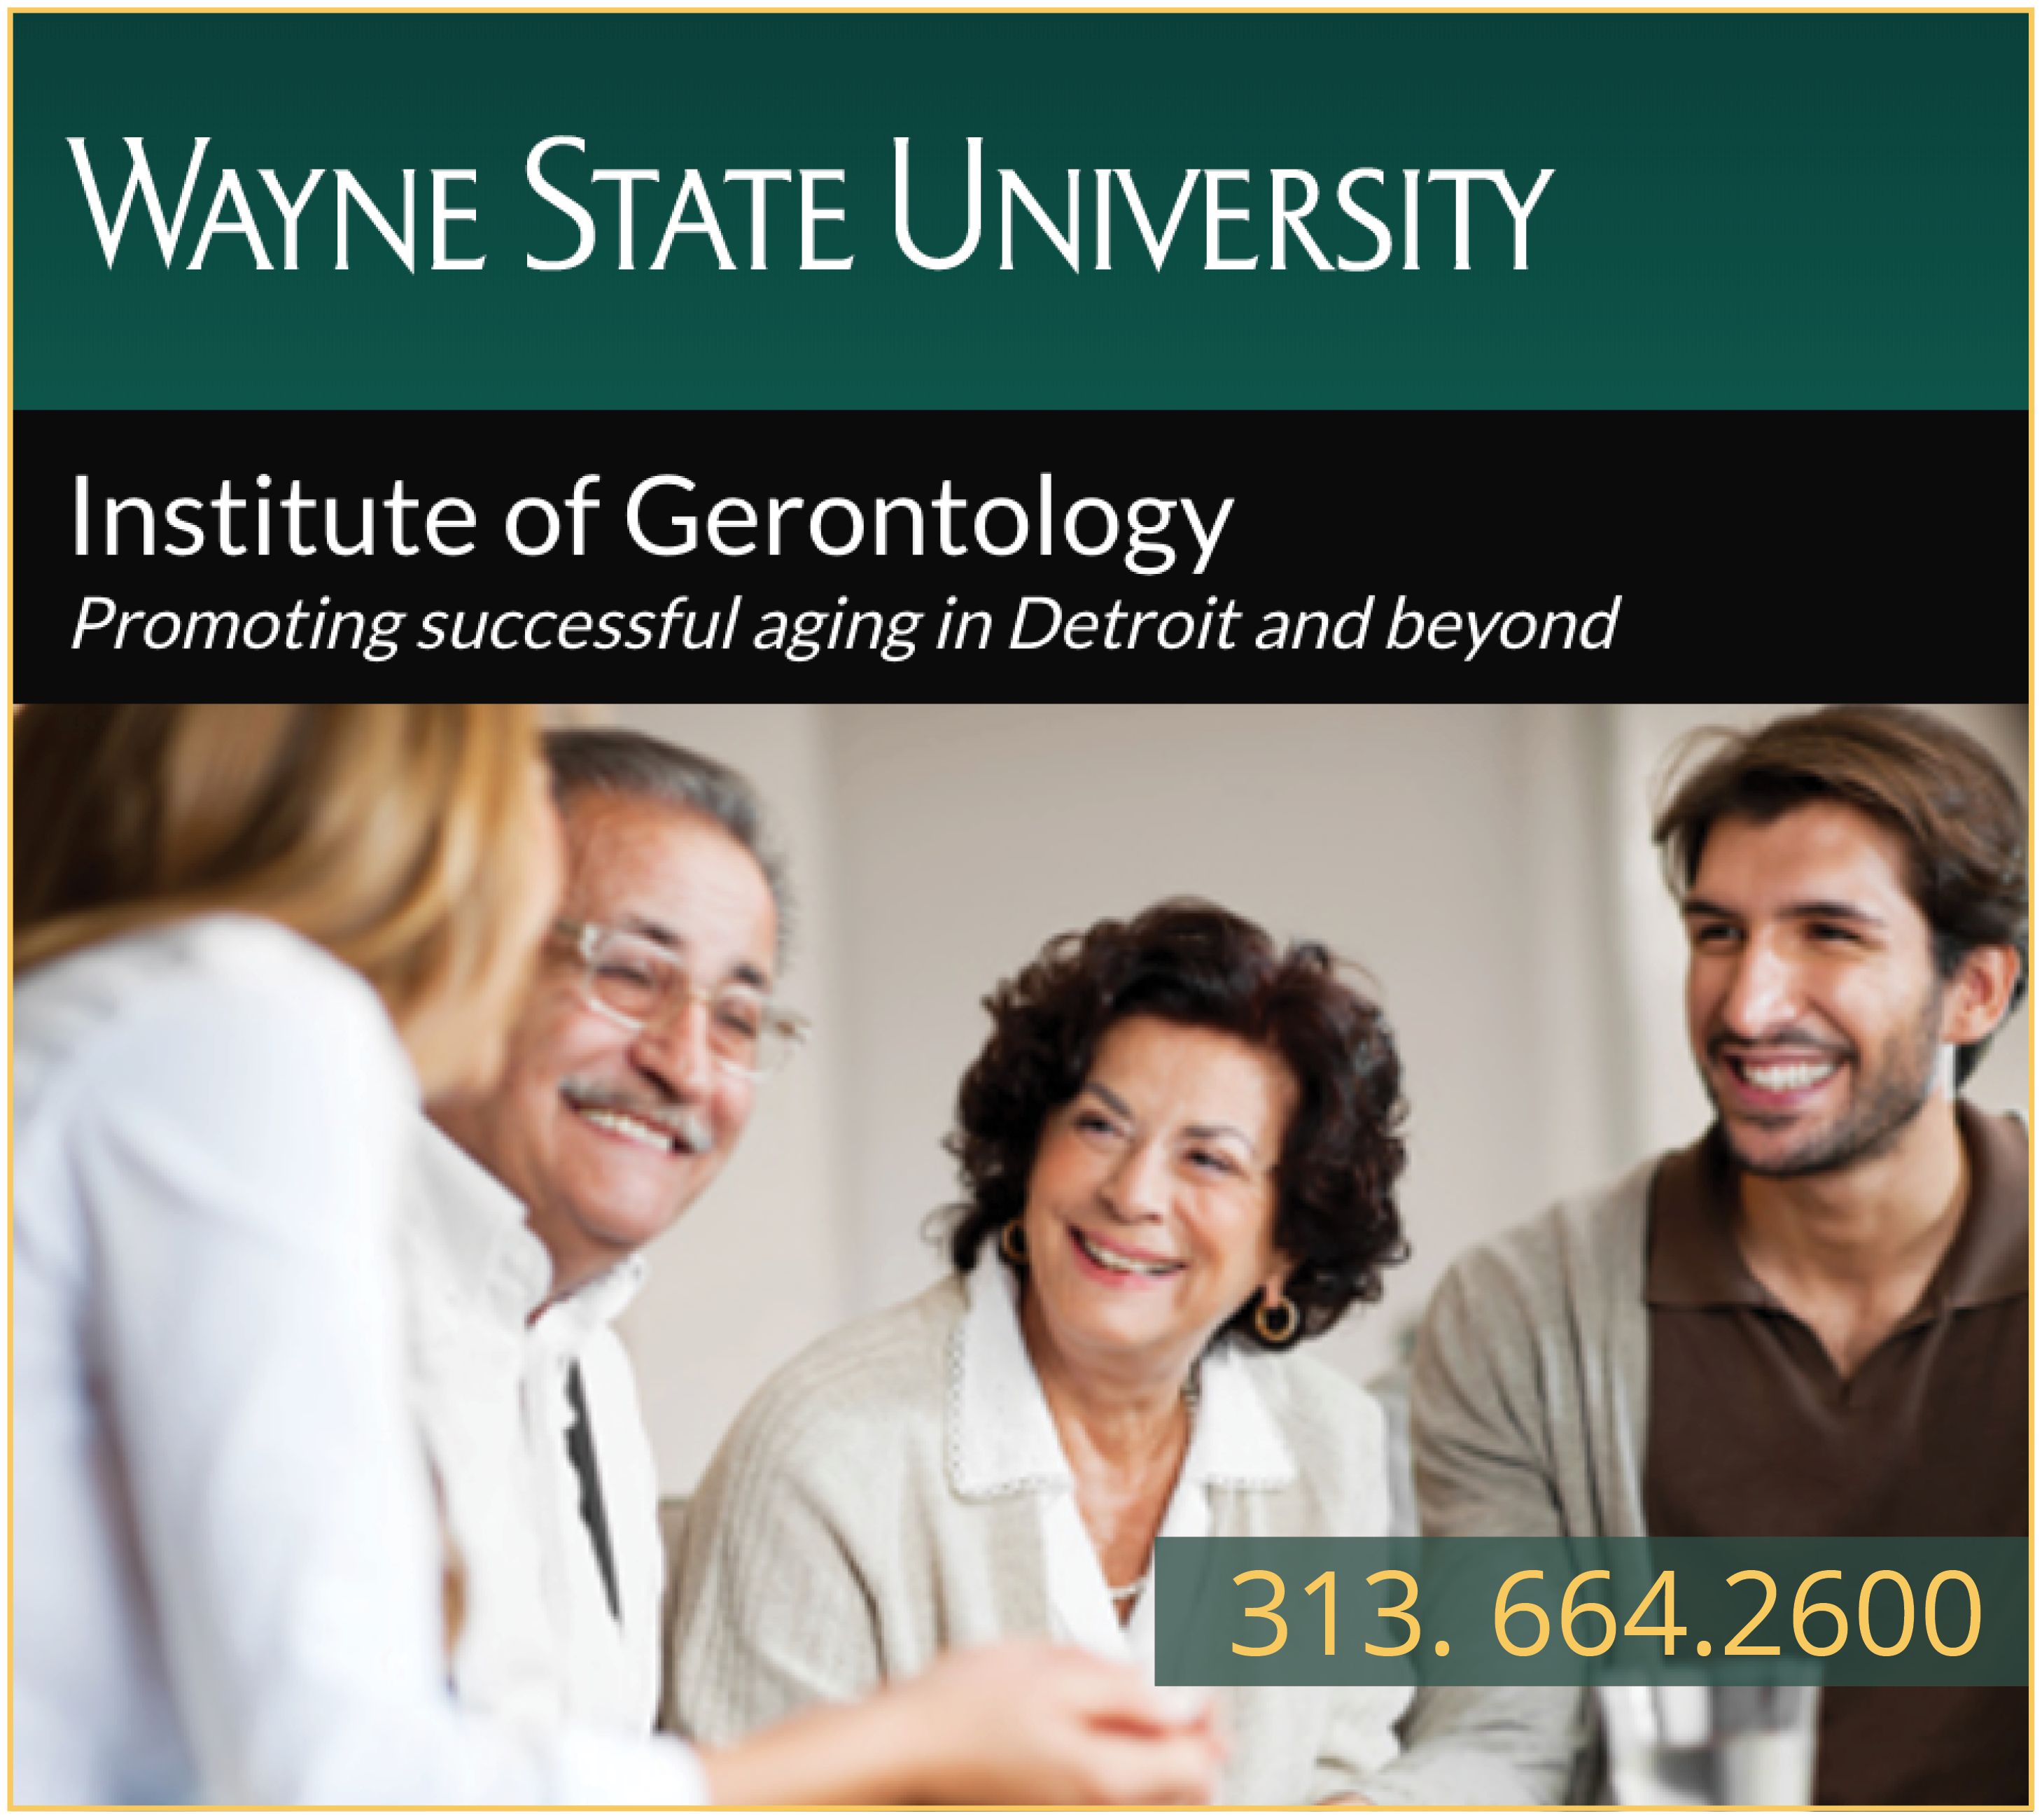 Wayne State University Institute of Gerontology